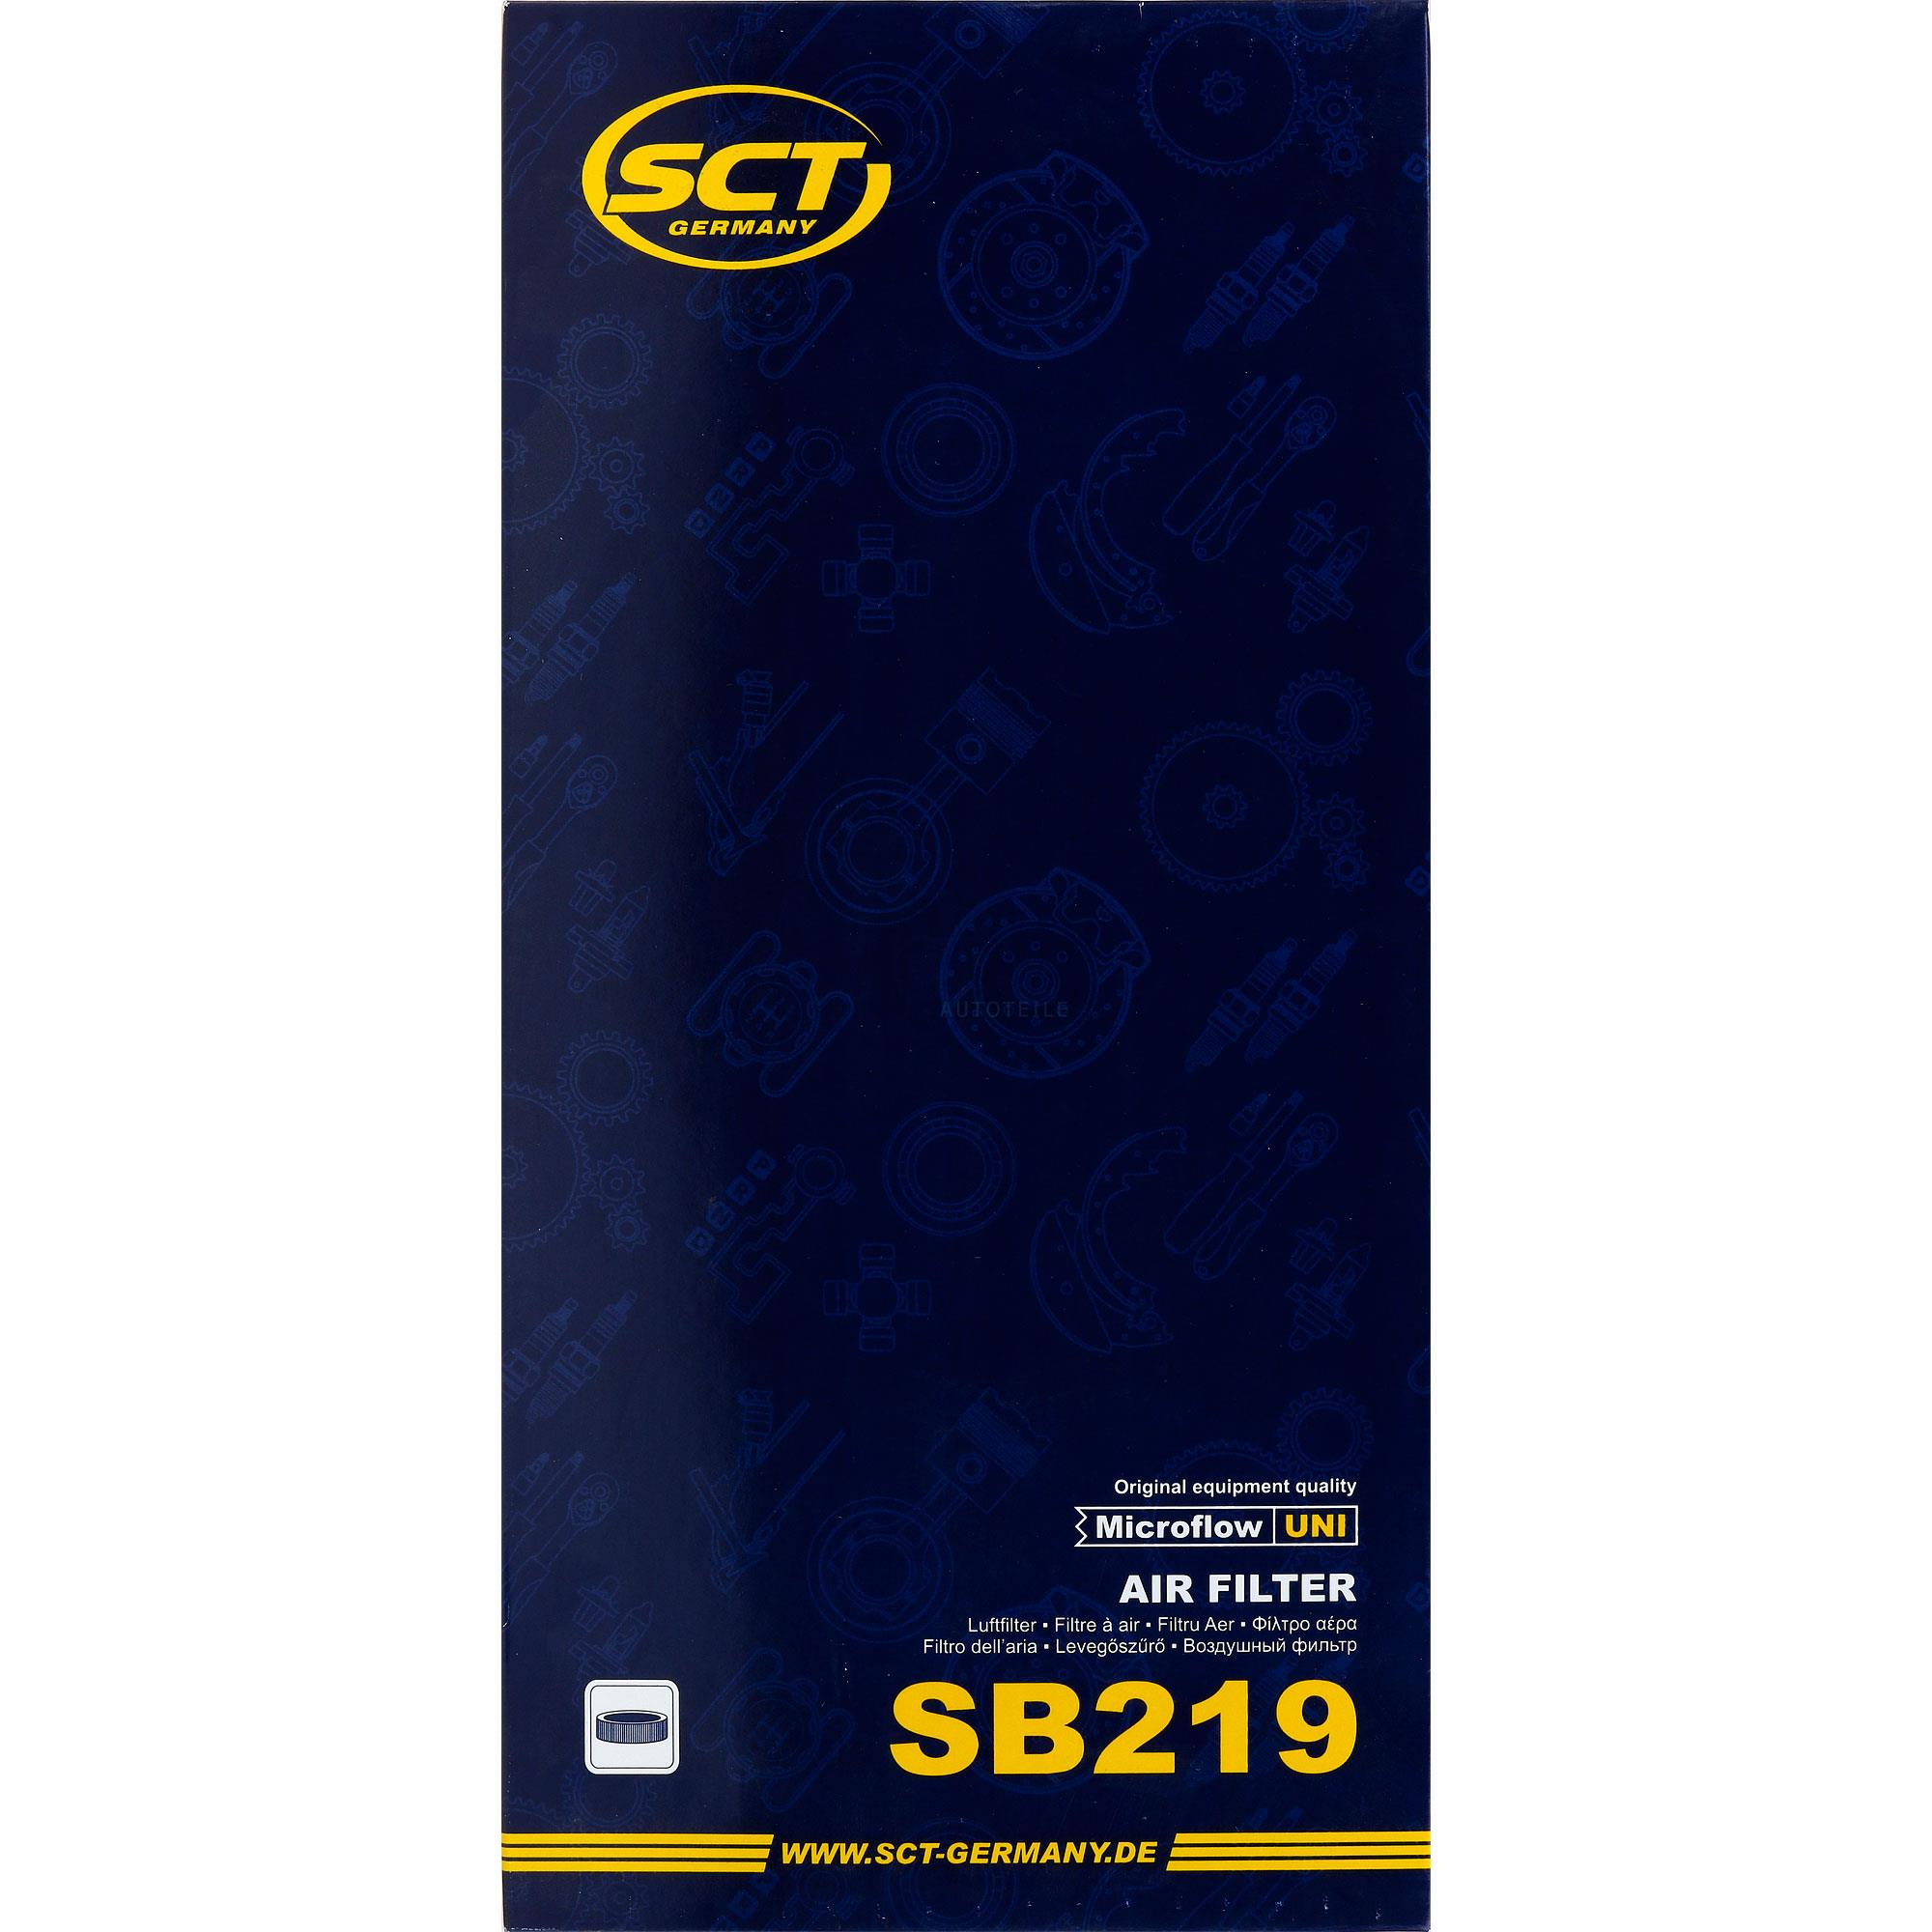 SCT - MANNOL Luftfilter für Peugeot 807 E 2.0 HDi 2.2 406 8B 1.8 16V 9D 9U